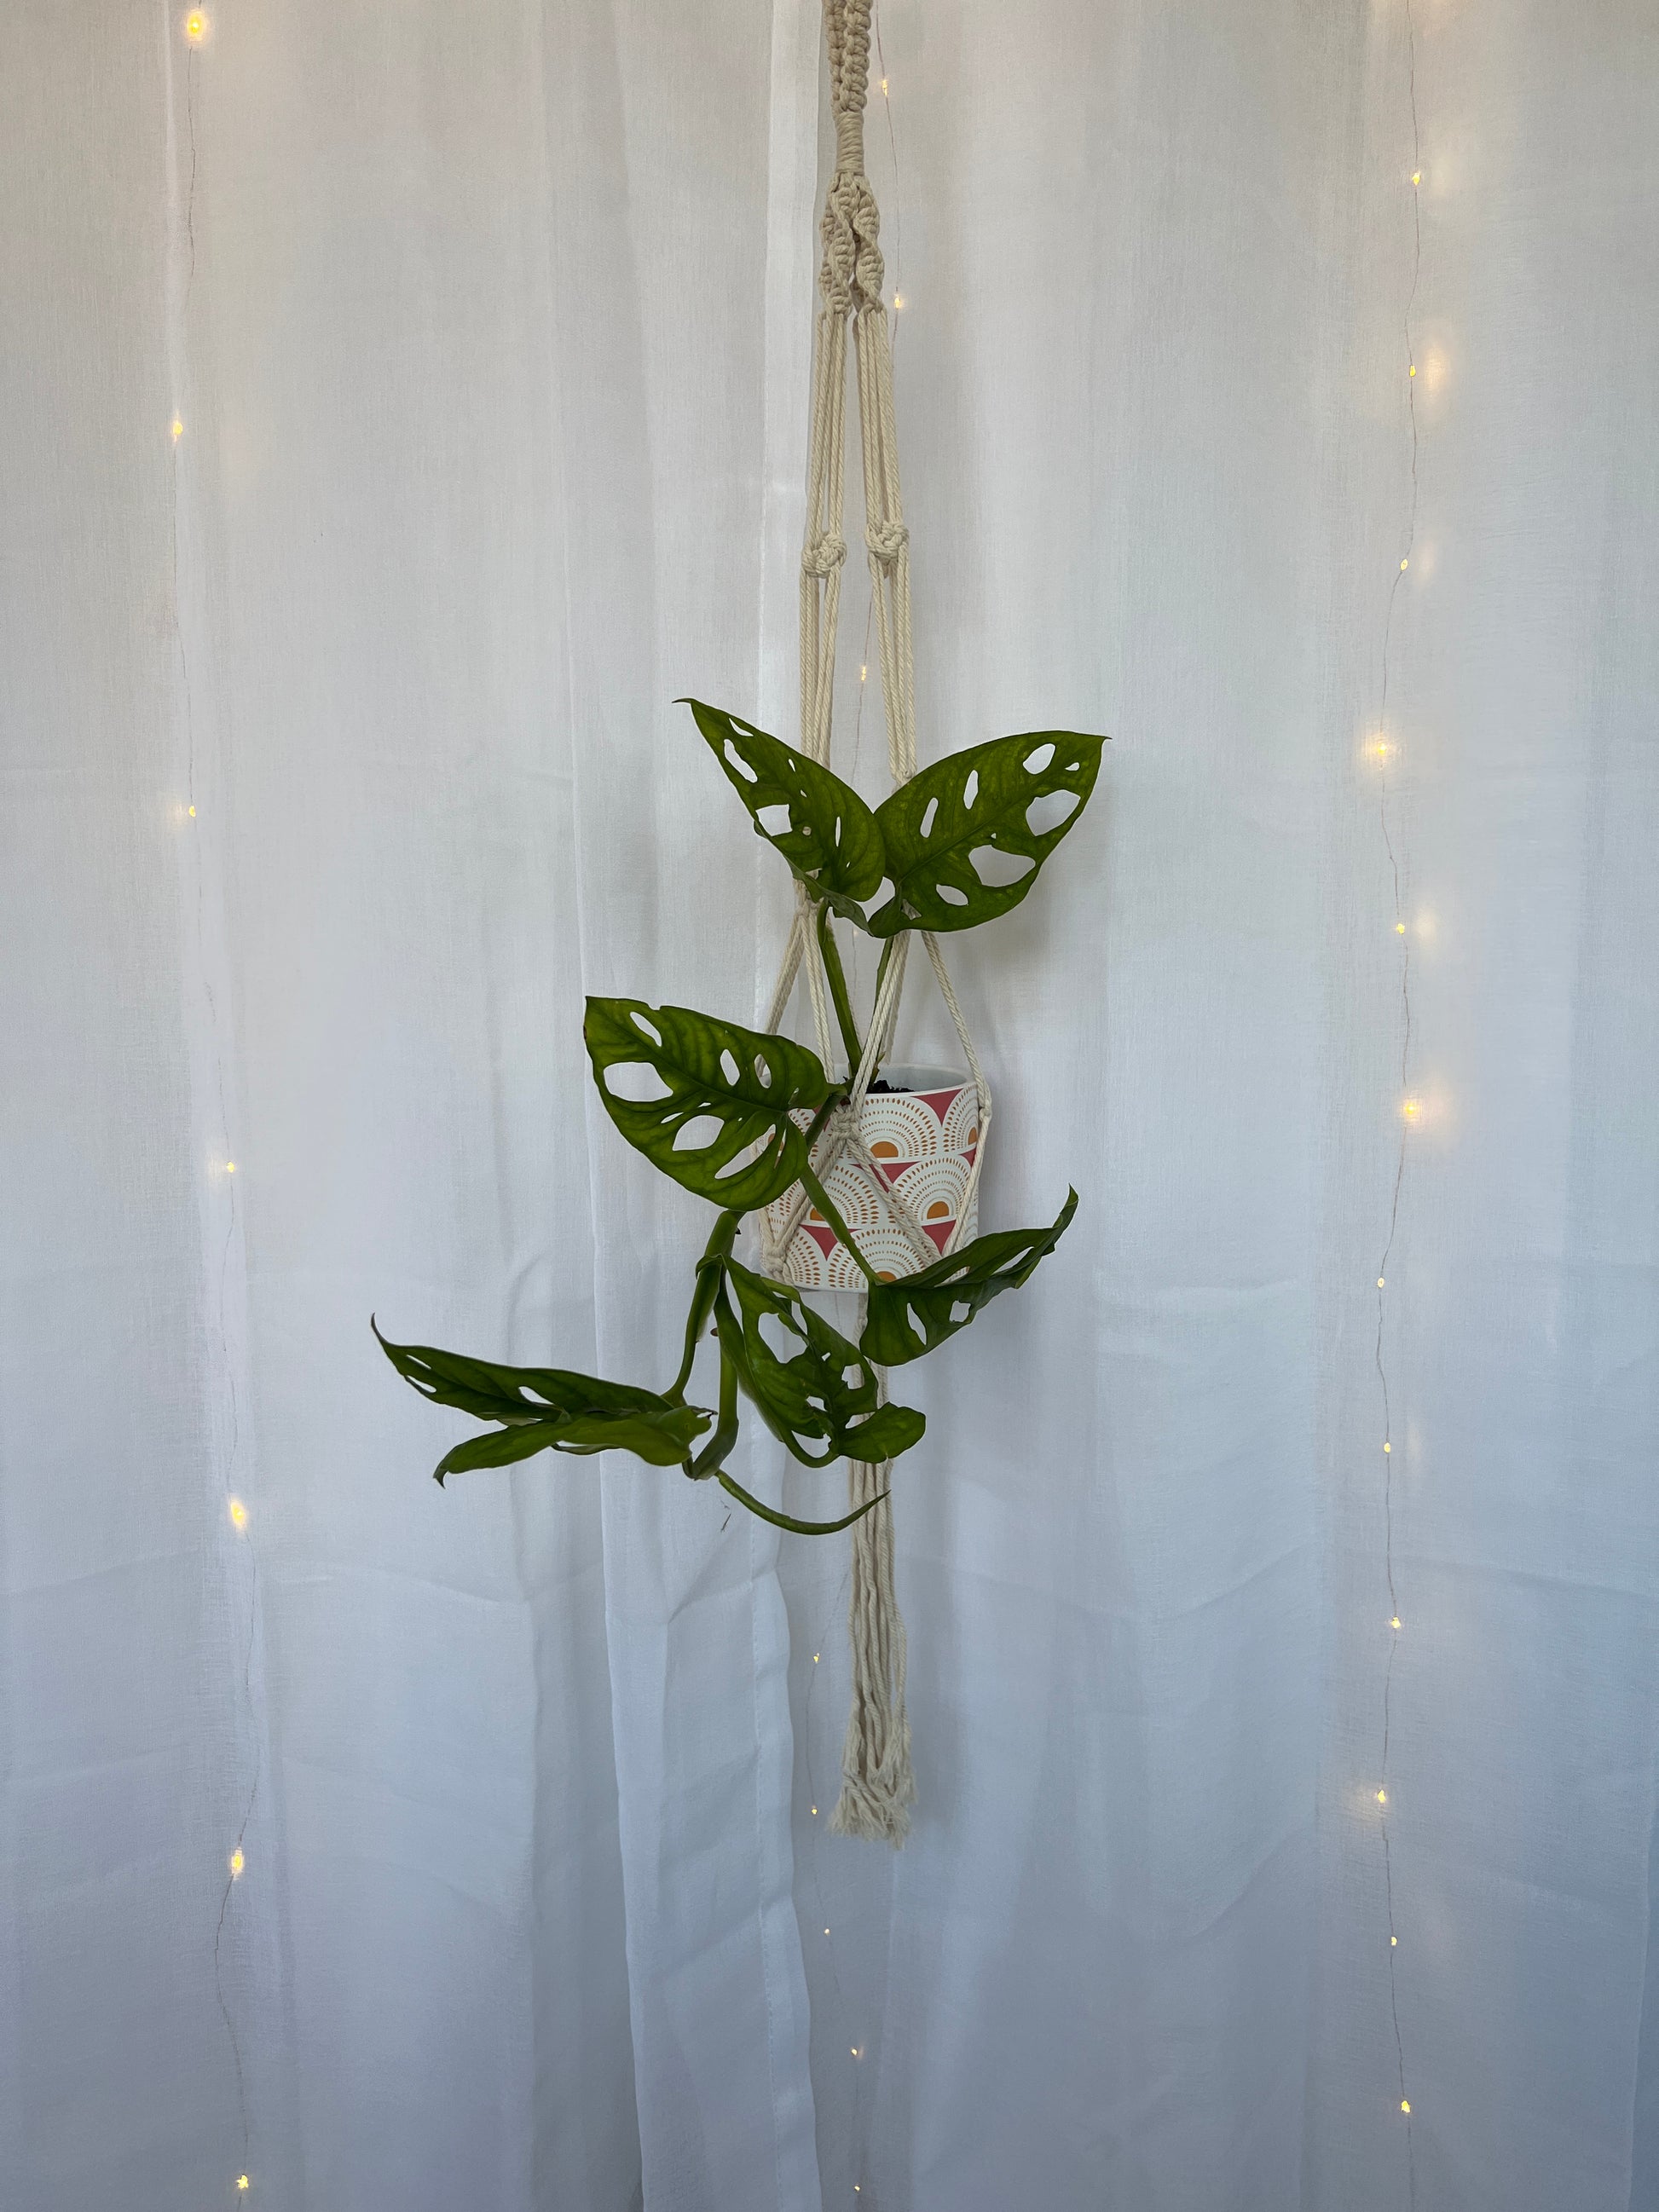 Twisted Macramé Indoor Plant Pot Hanger ~50cm Boho Chic Décor Home Garden